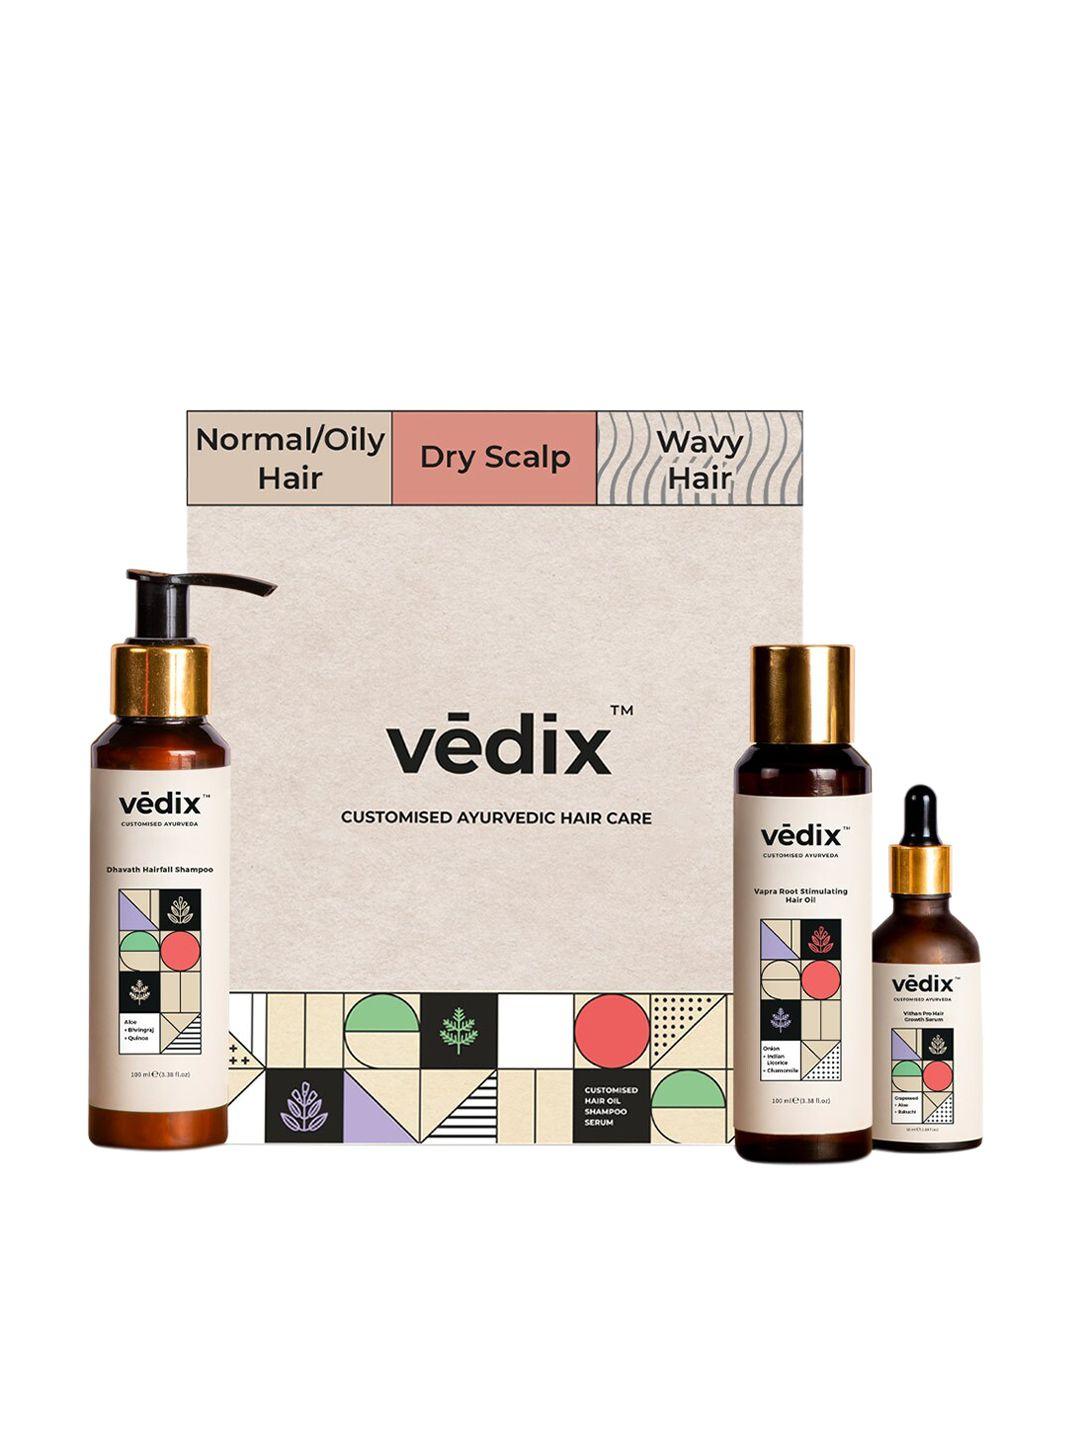 vedix customized hair fall control regimen for normal hair - dry scalp wavy hair 540 gm